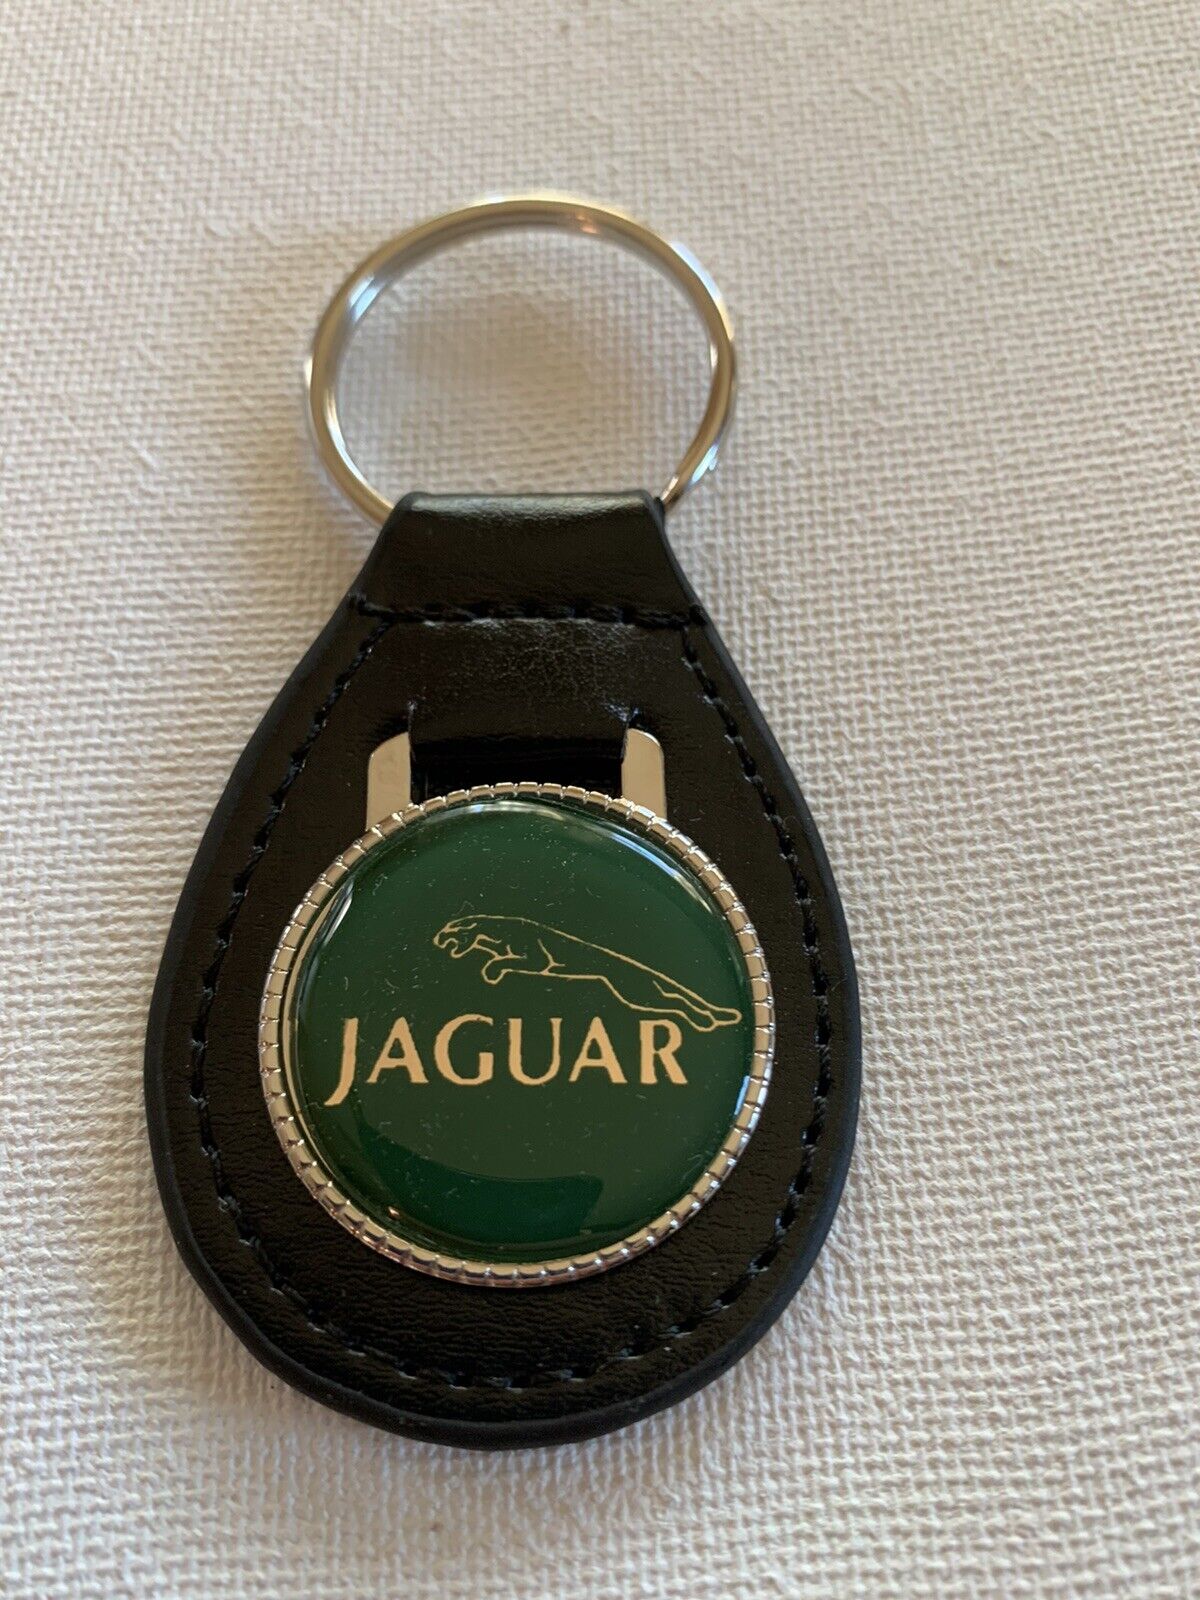 Jaguar Sales for sale Keychain Key Fob Chain Brand new